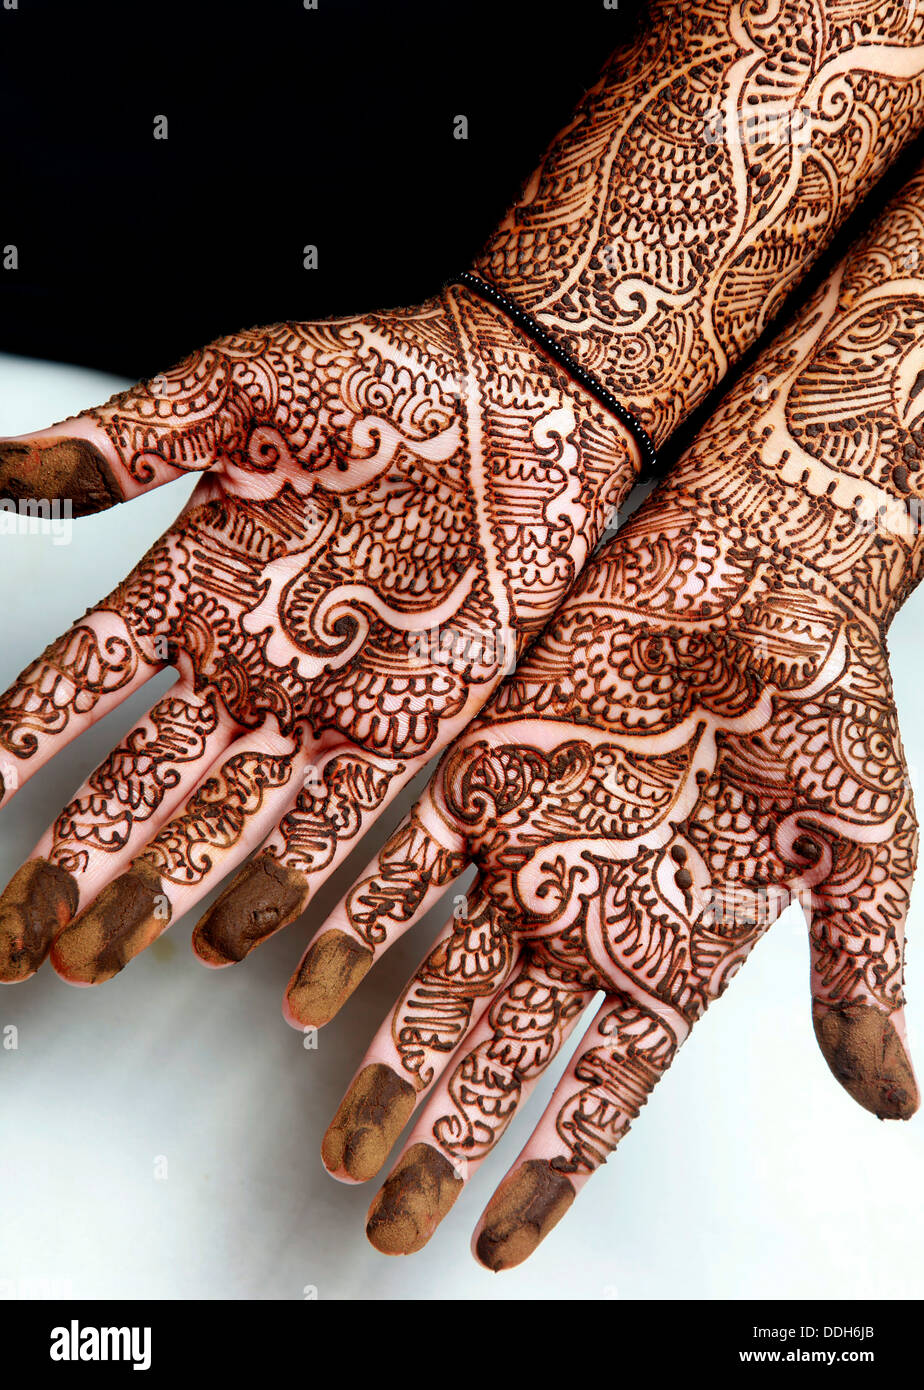 Mehandi design showing on hands Stock Photo - Alamy